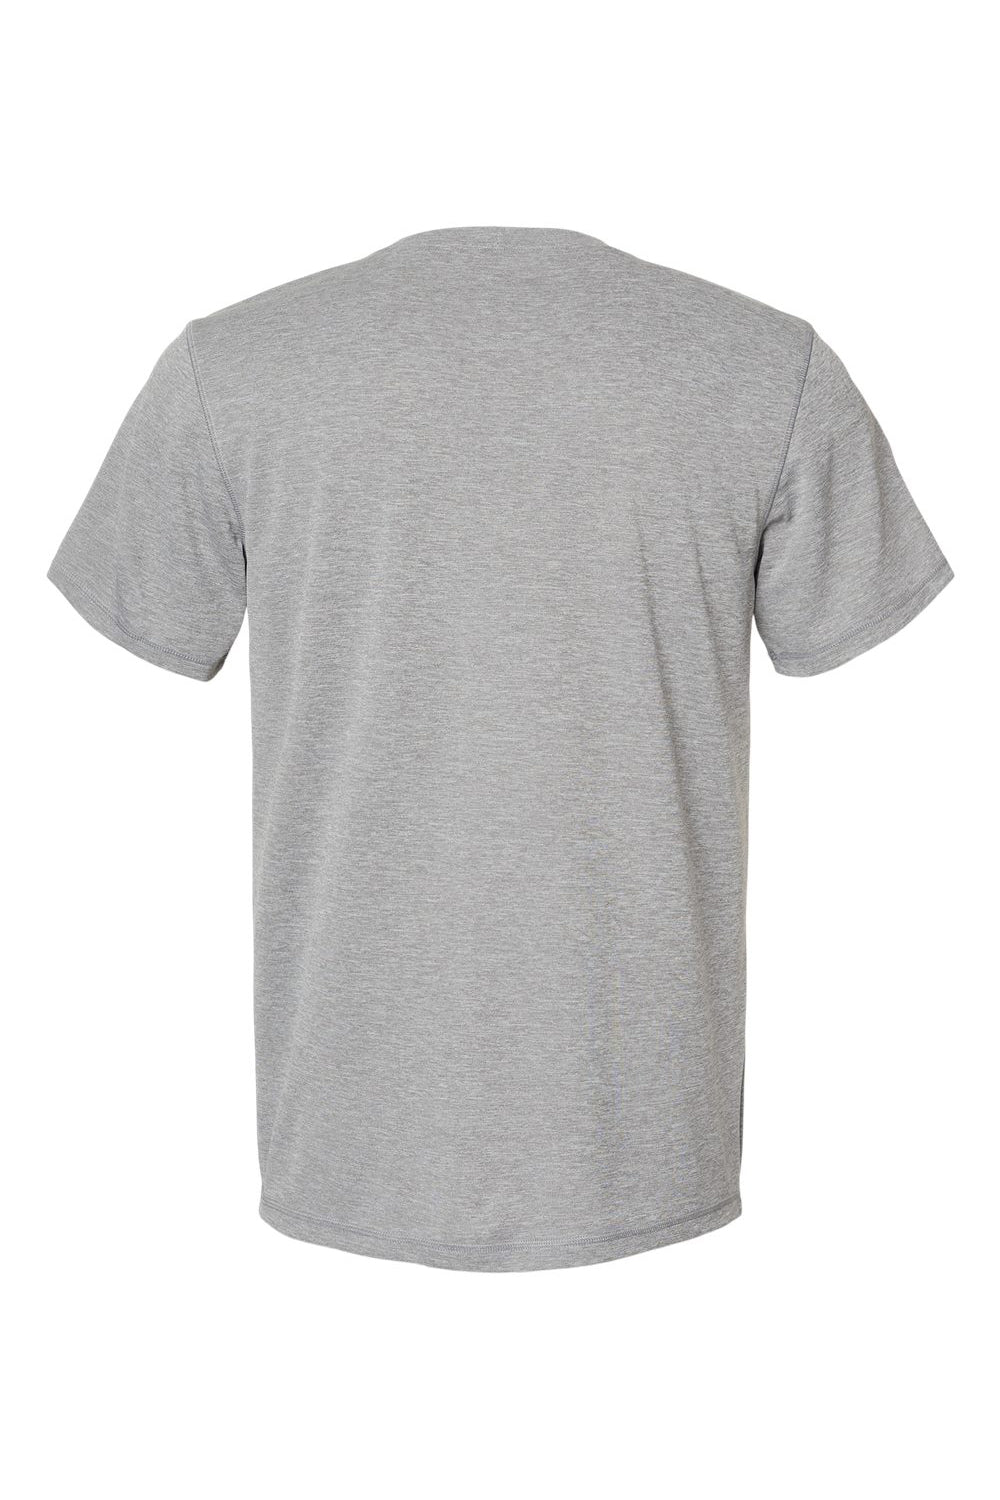 Adidas A376 Mens UPF 50+ Short Sleeve Crewneck T-Shirt Heather Grey Flat Back